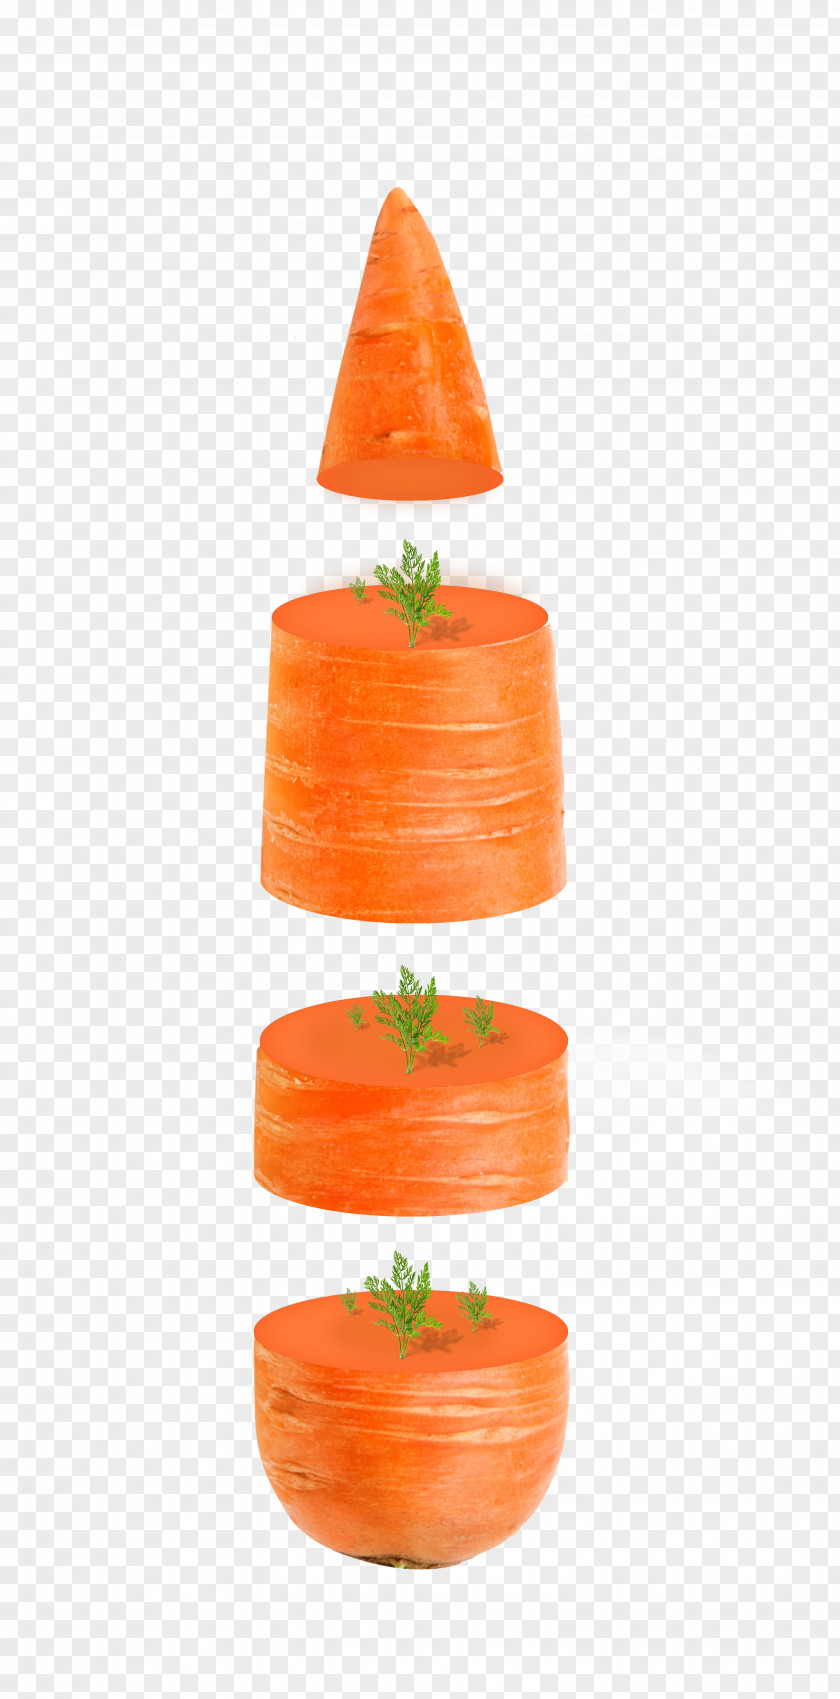 Cut Carrots Carrot Vegetable Orange Computer File PNG